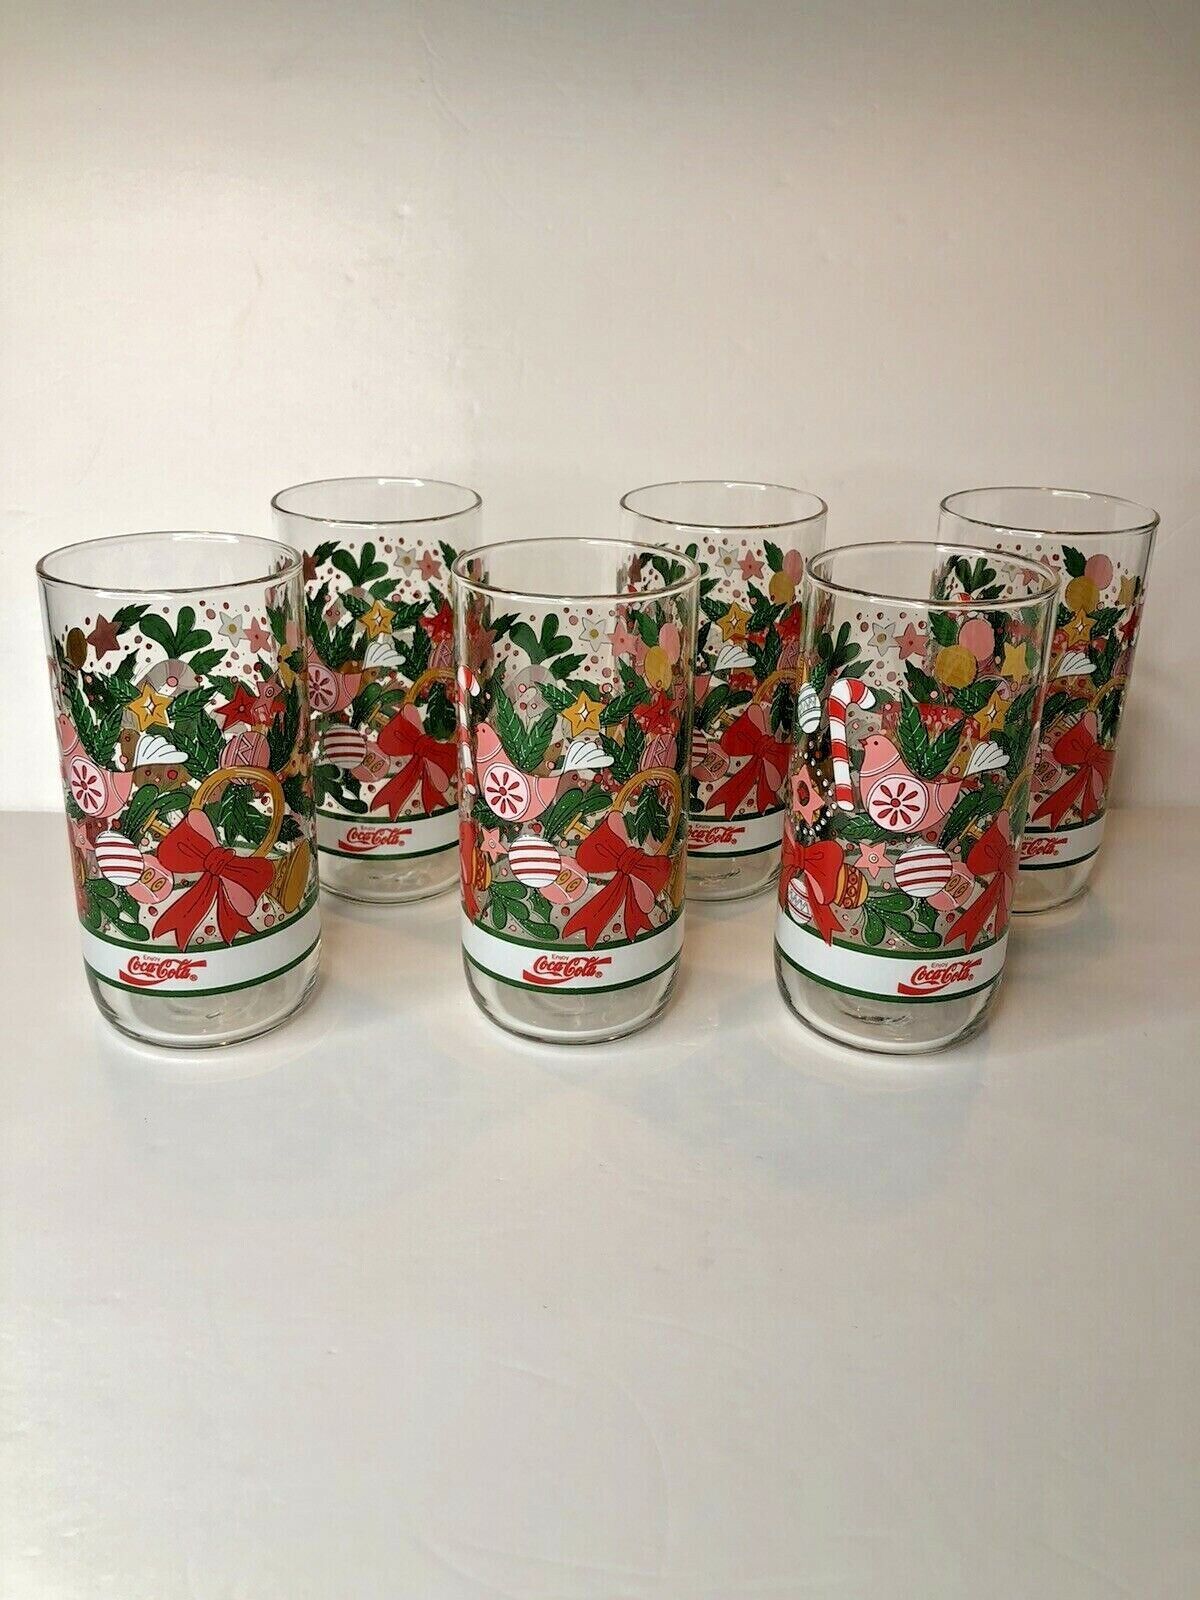 Primary image for 6 Jack's Restaurant 16 Oz Coca Cola Glass Tumblers Glasses Christmas Pattern EUC